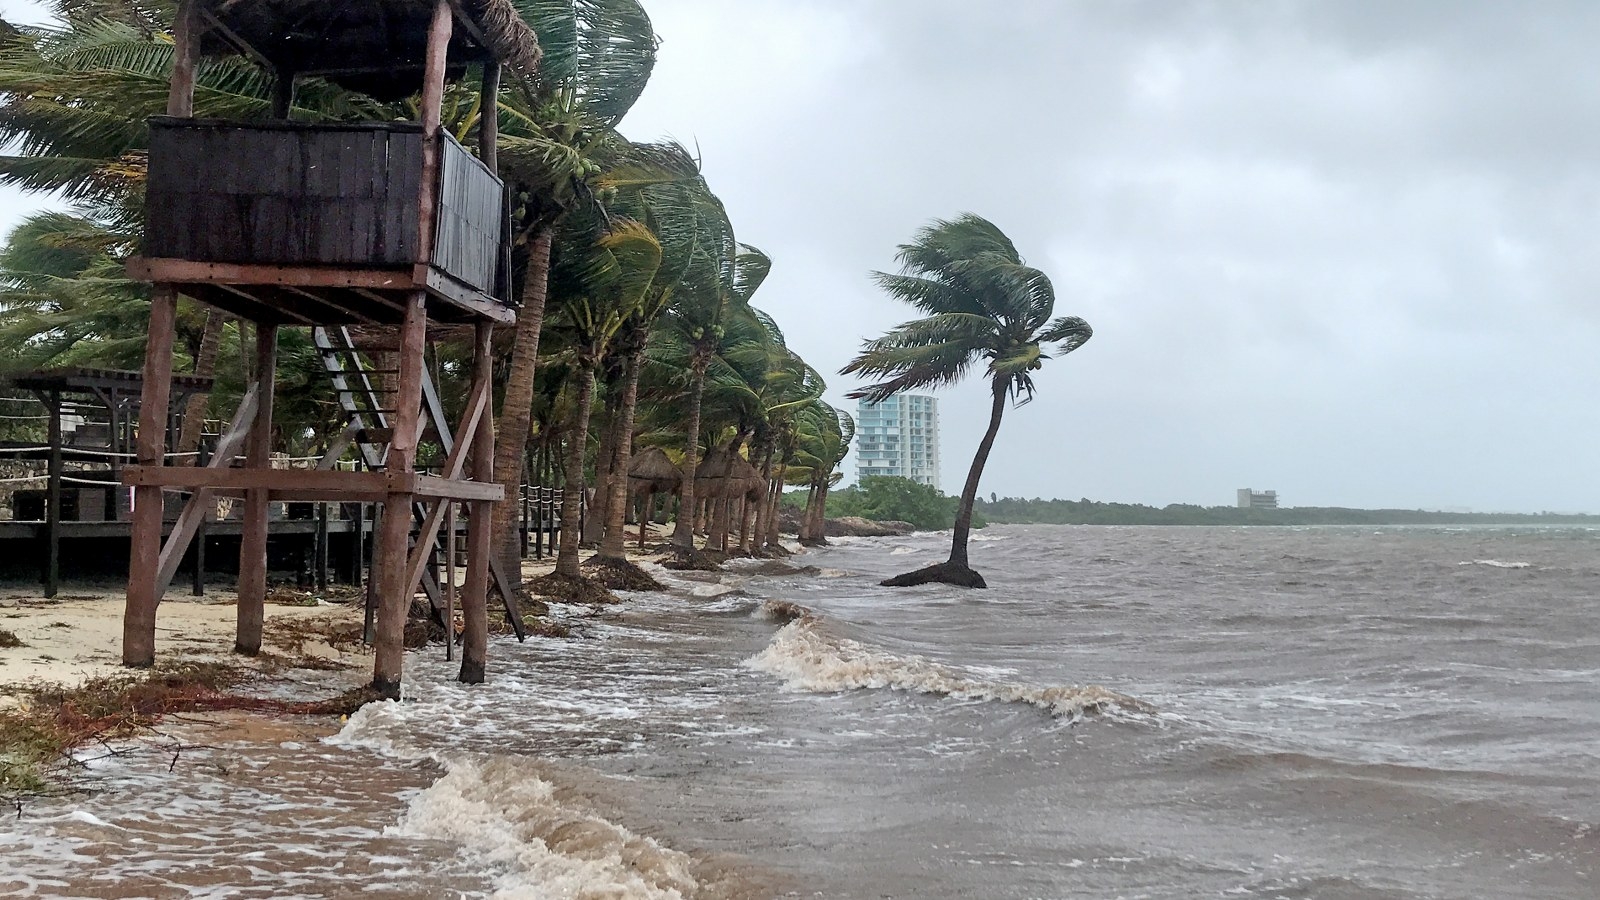 Ciclón Tropical Hilary: ¿Afectará a Yucatán? Esta es su trayectoria